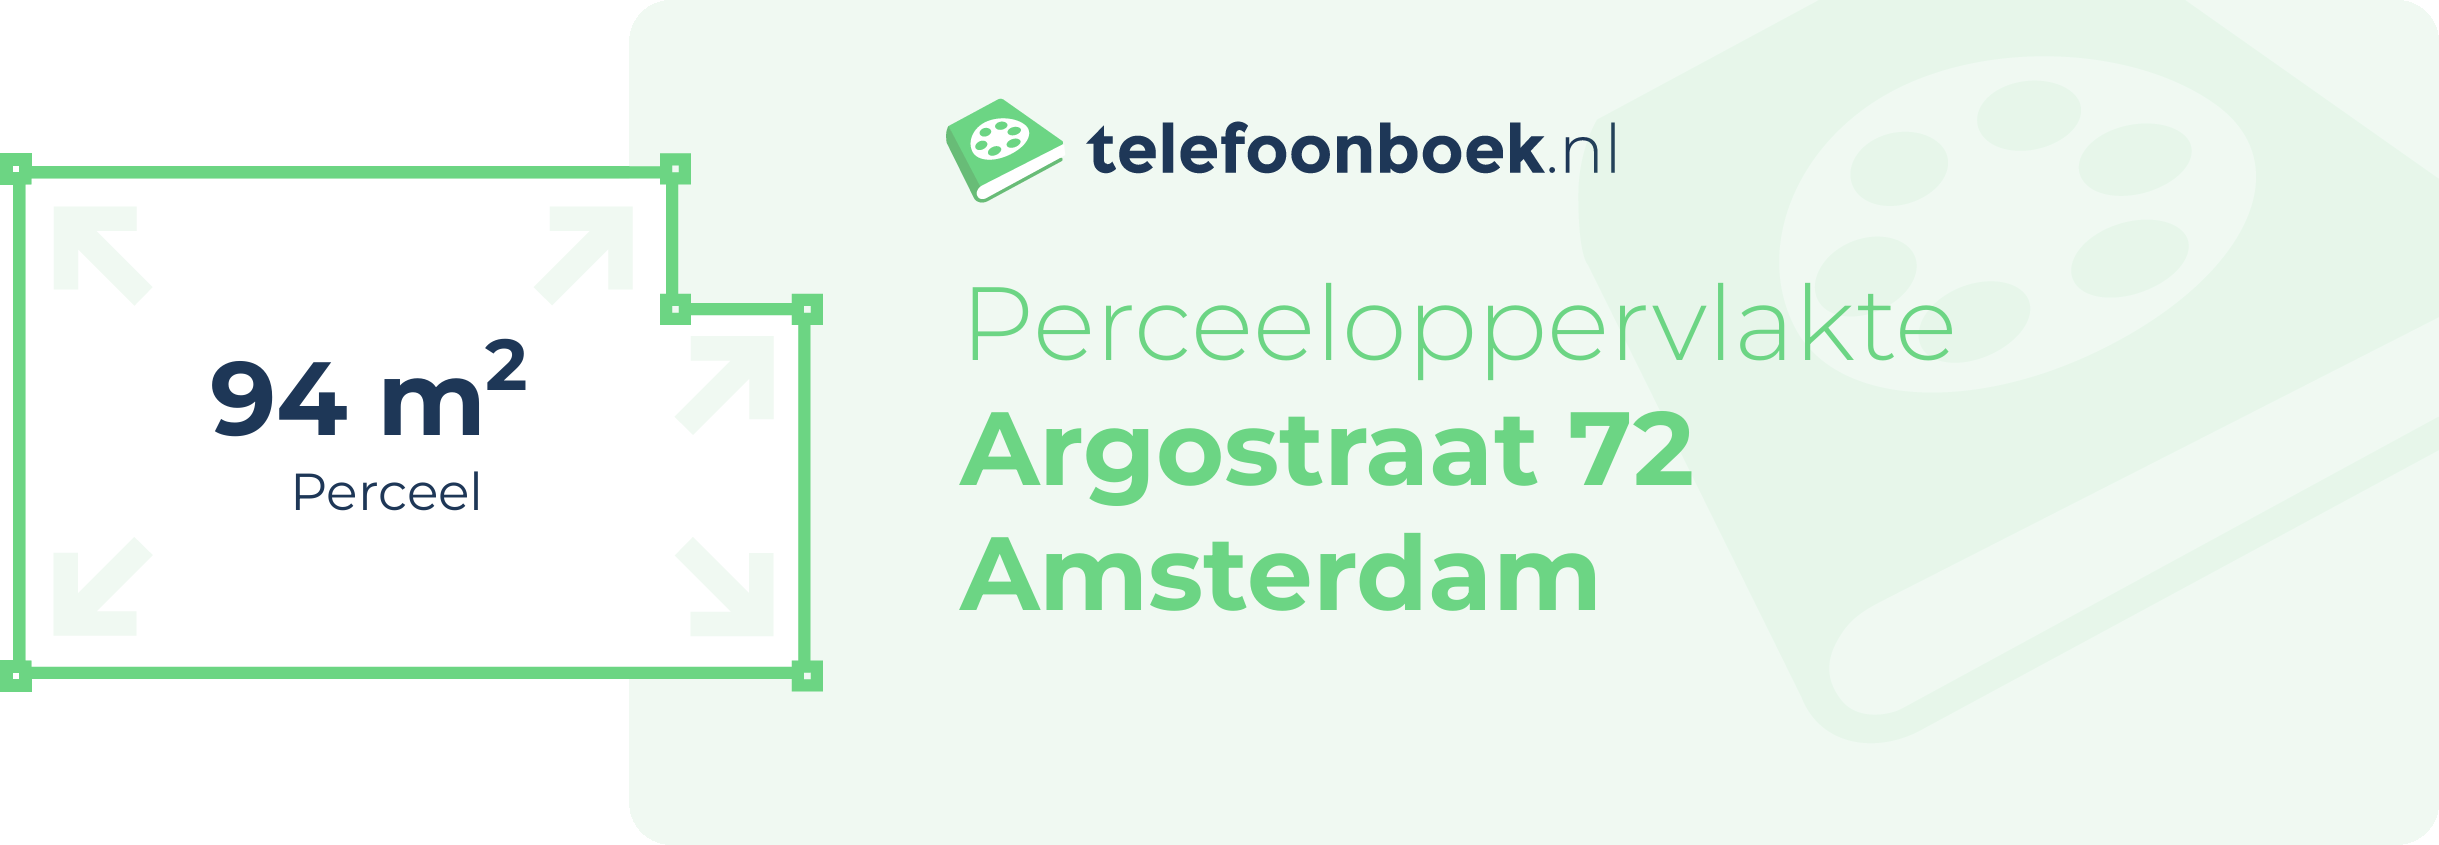 Perceeloppervlakte Argostraat 72 Amsterdam